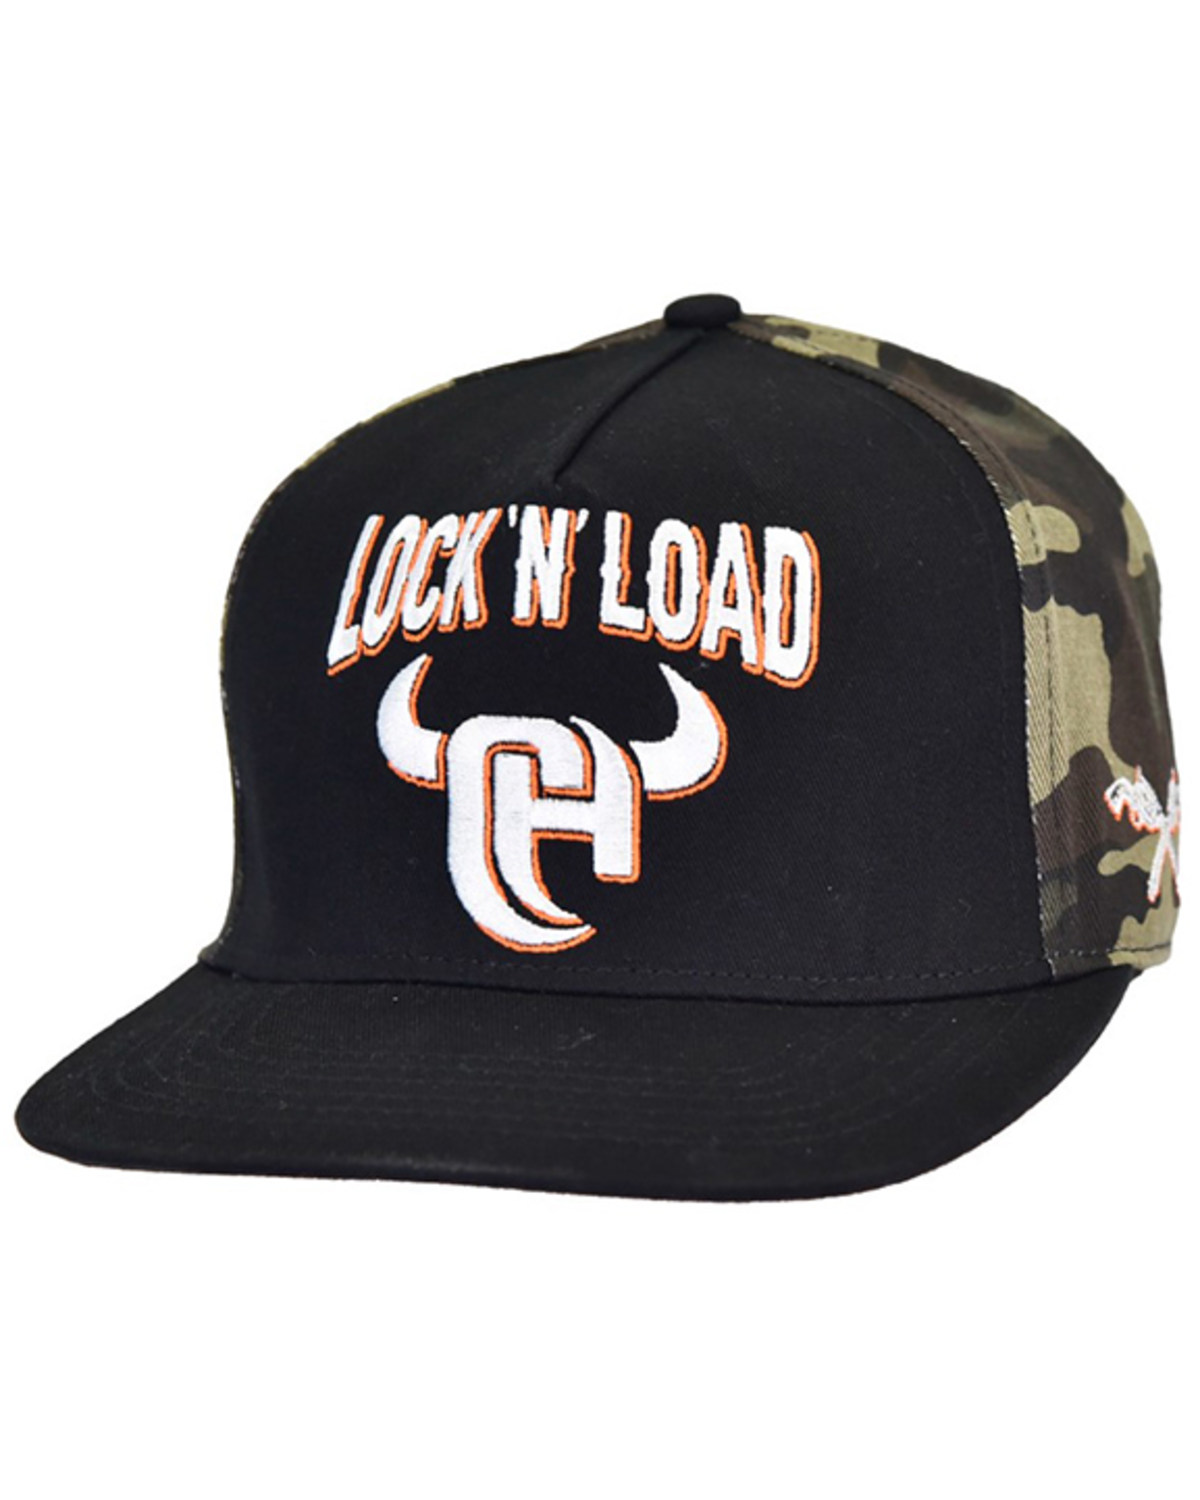 Cowboy Hardware Men's Lock & Load Flat Bill Baseball Cap